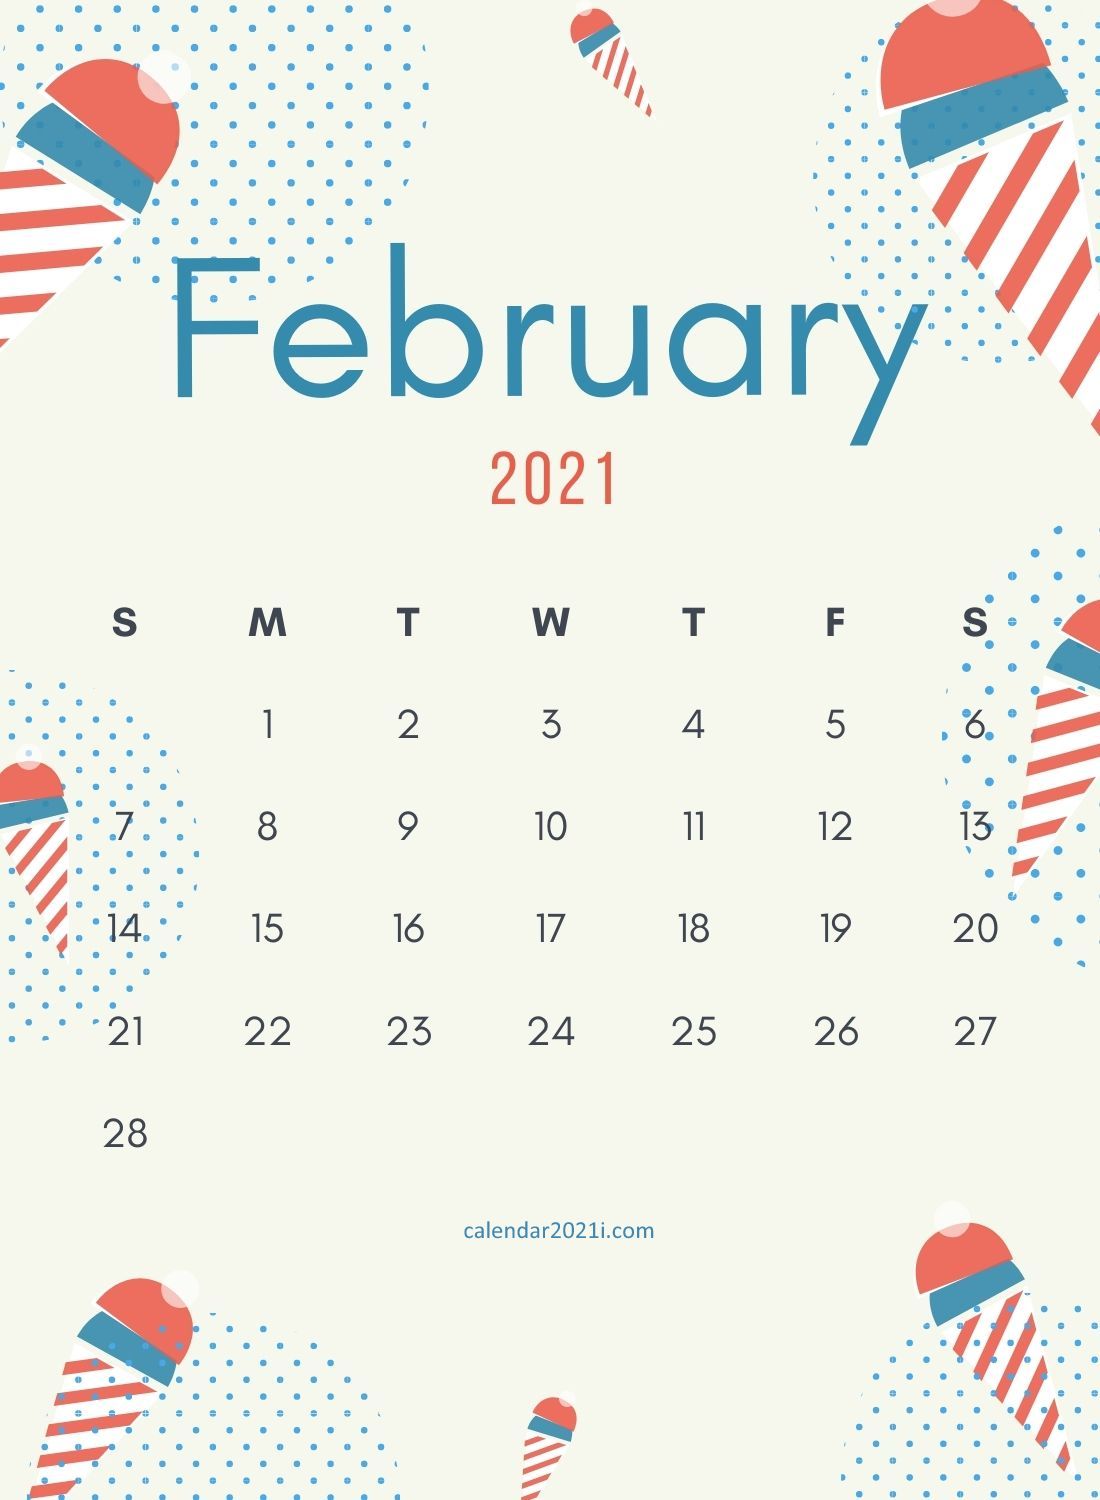 February 2021 Wall Calendar Printable